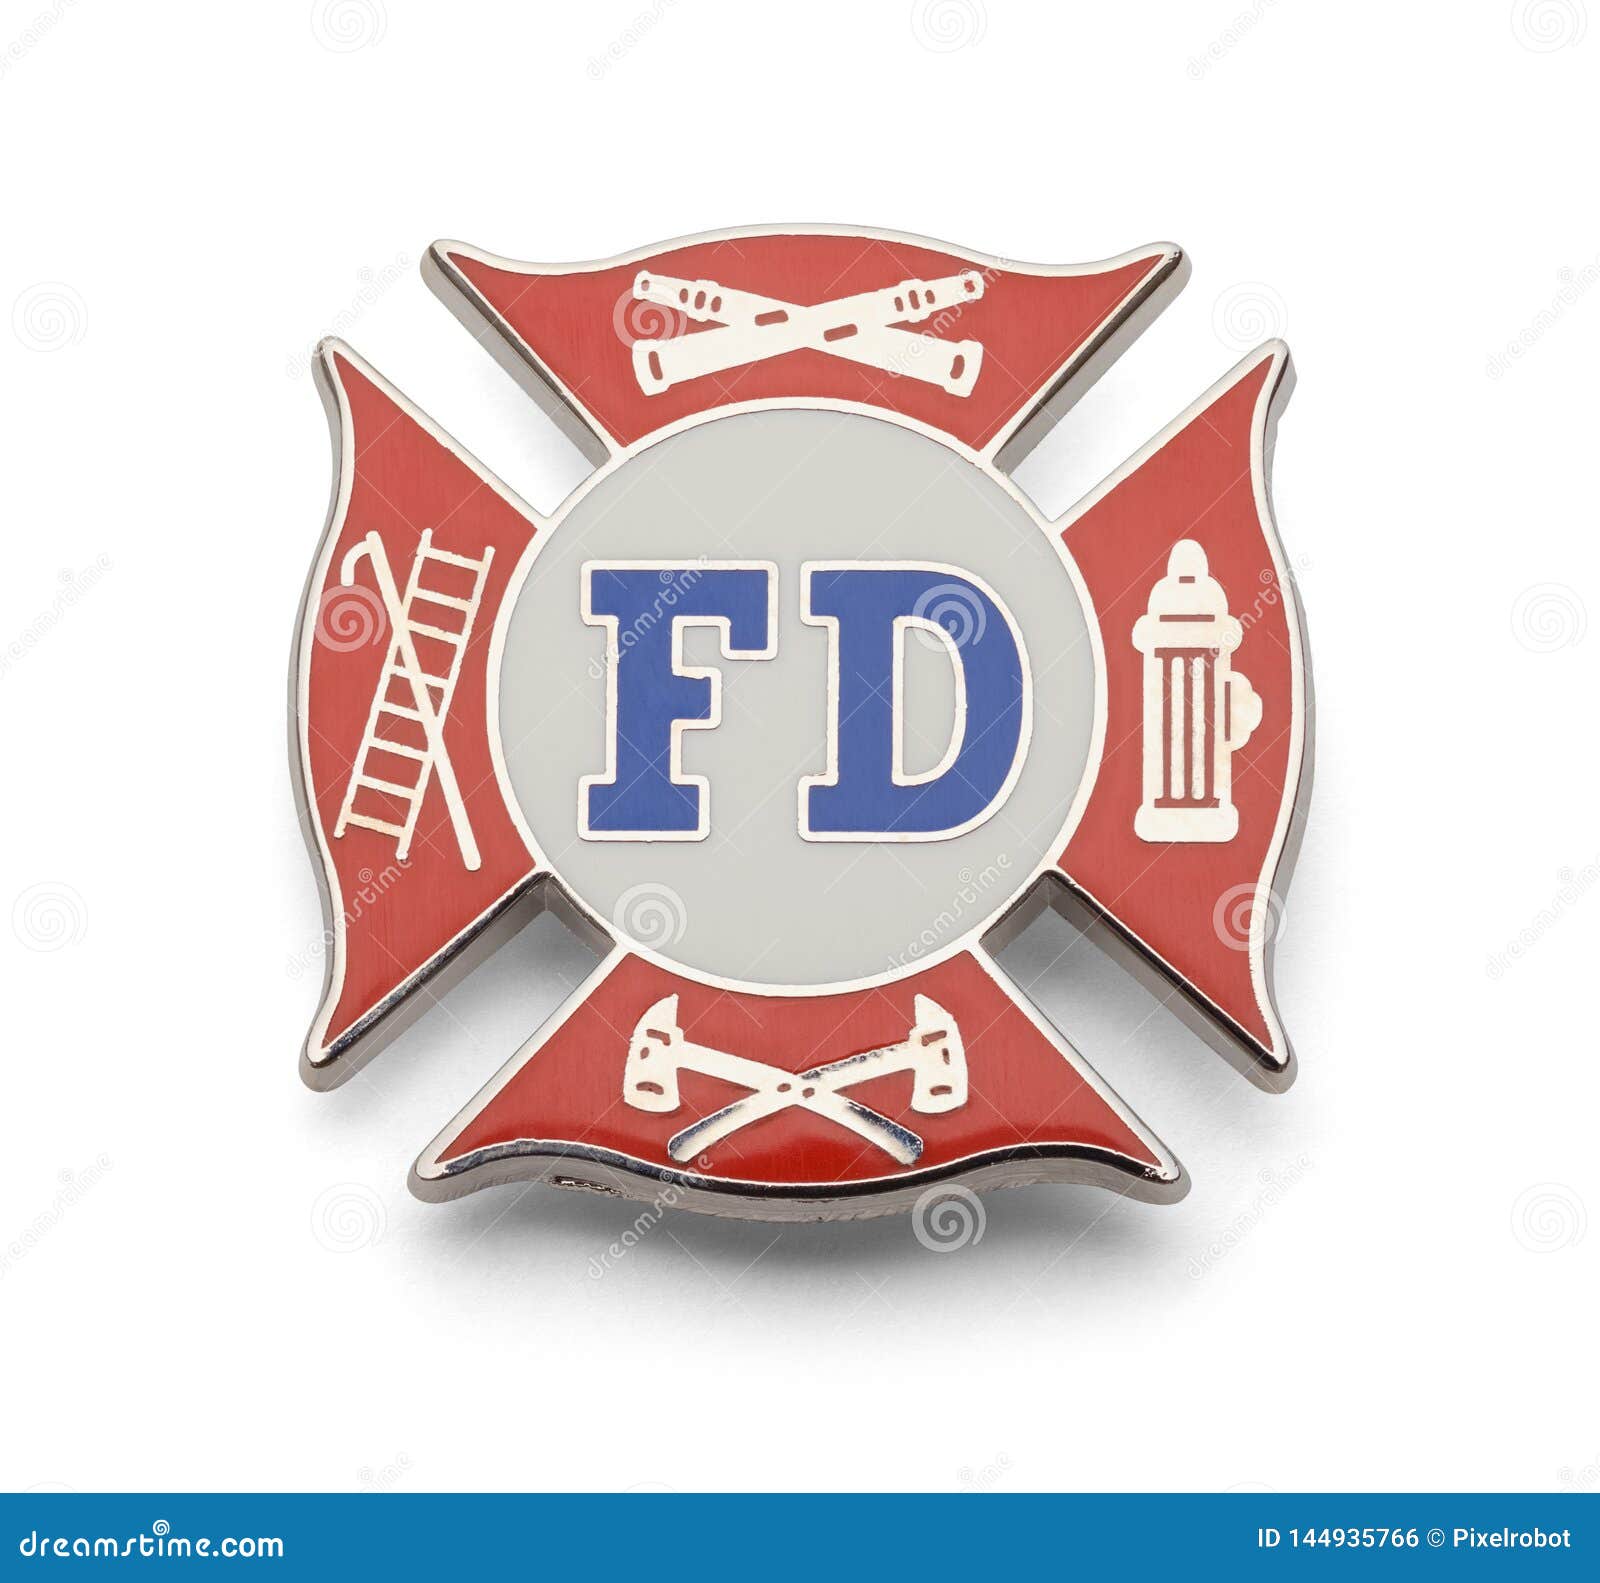 fire department badge